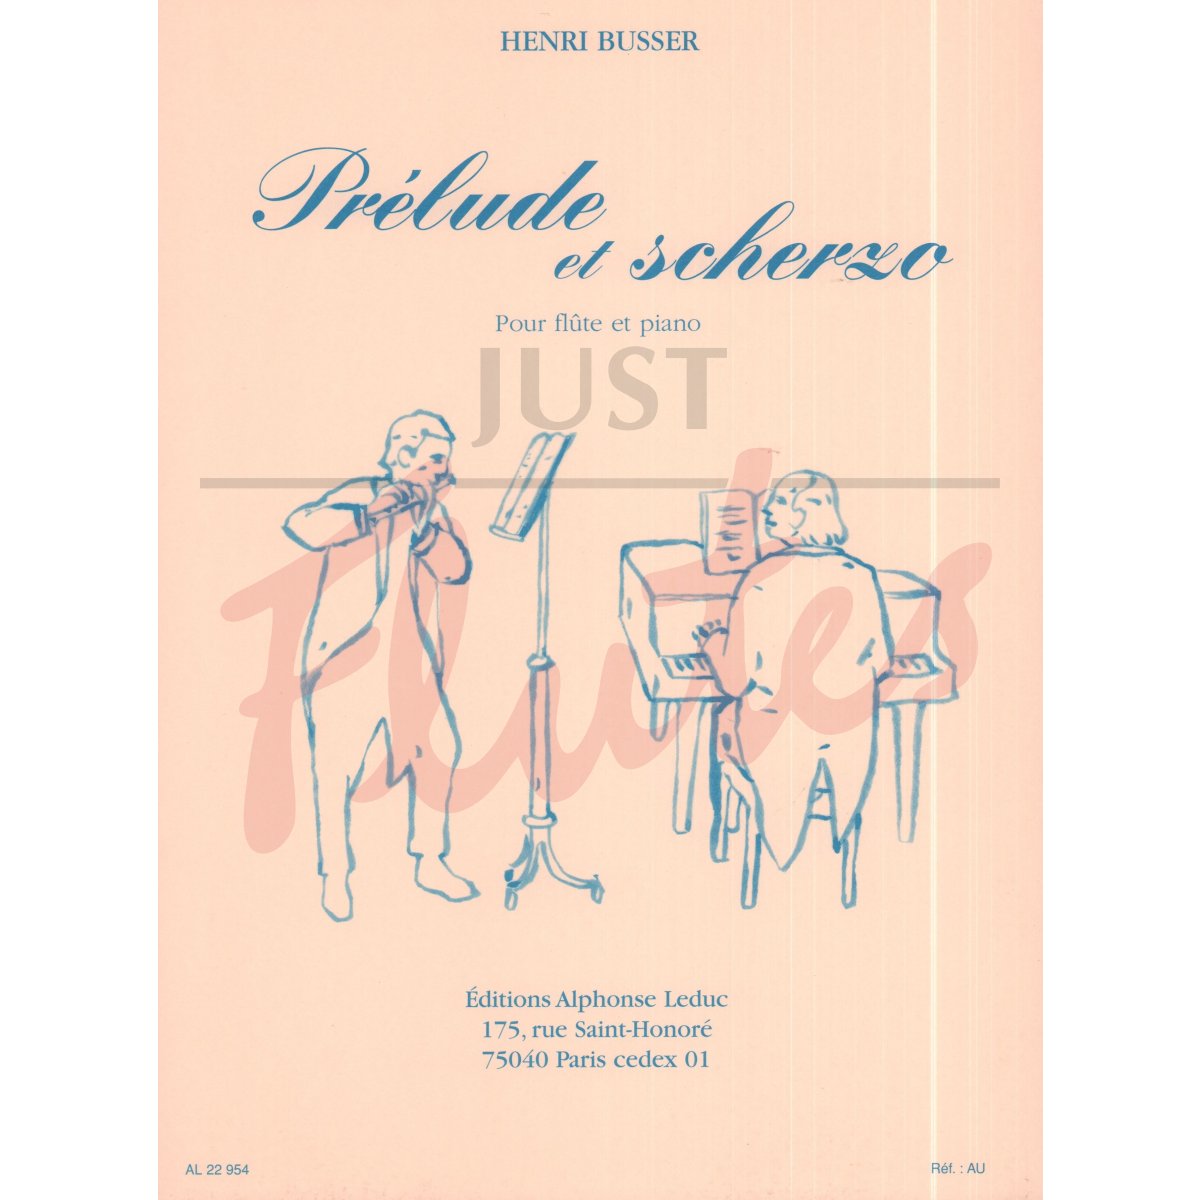 Prelude and Scherzo for Flute and Piano